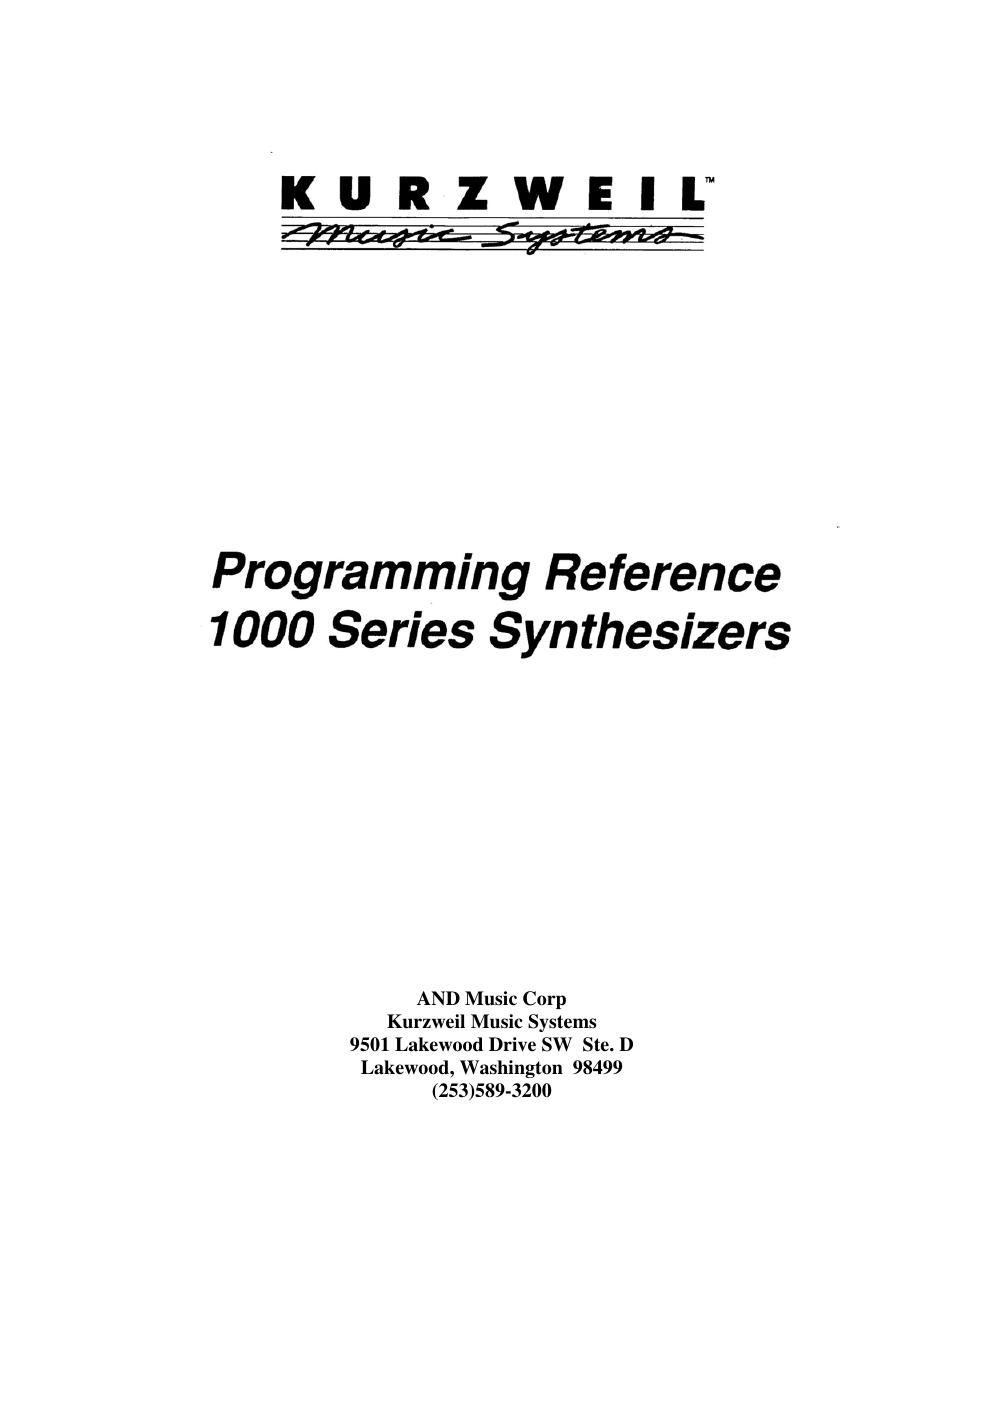 kurzweil k1000 series program reference